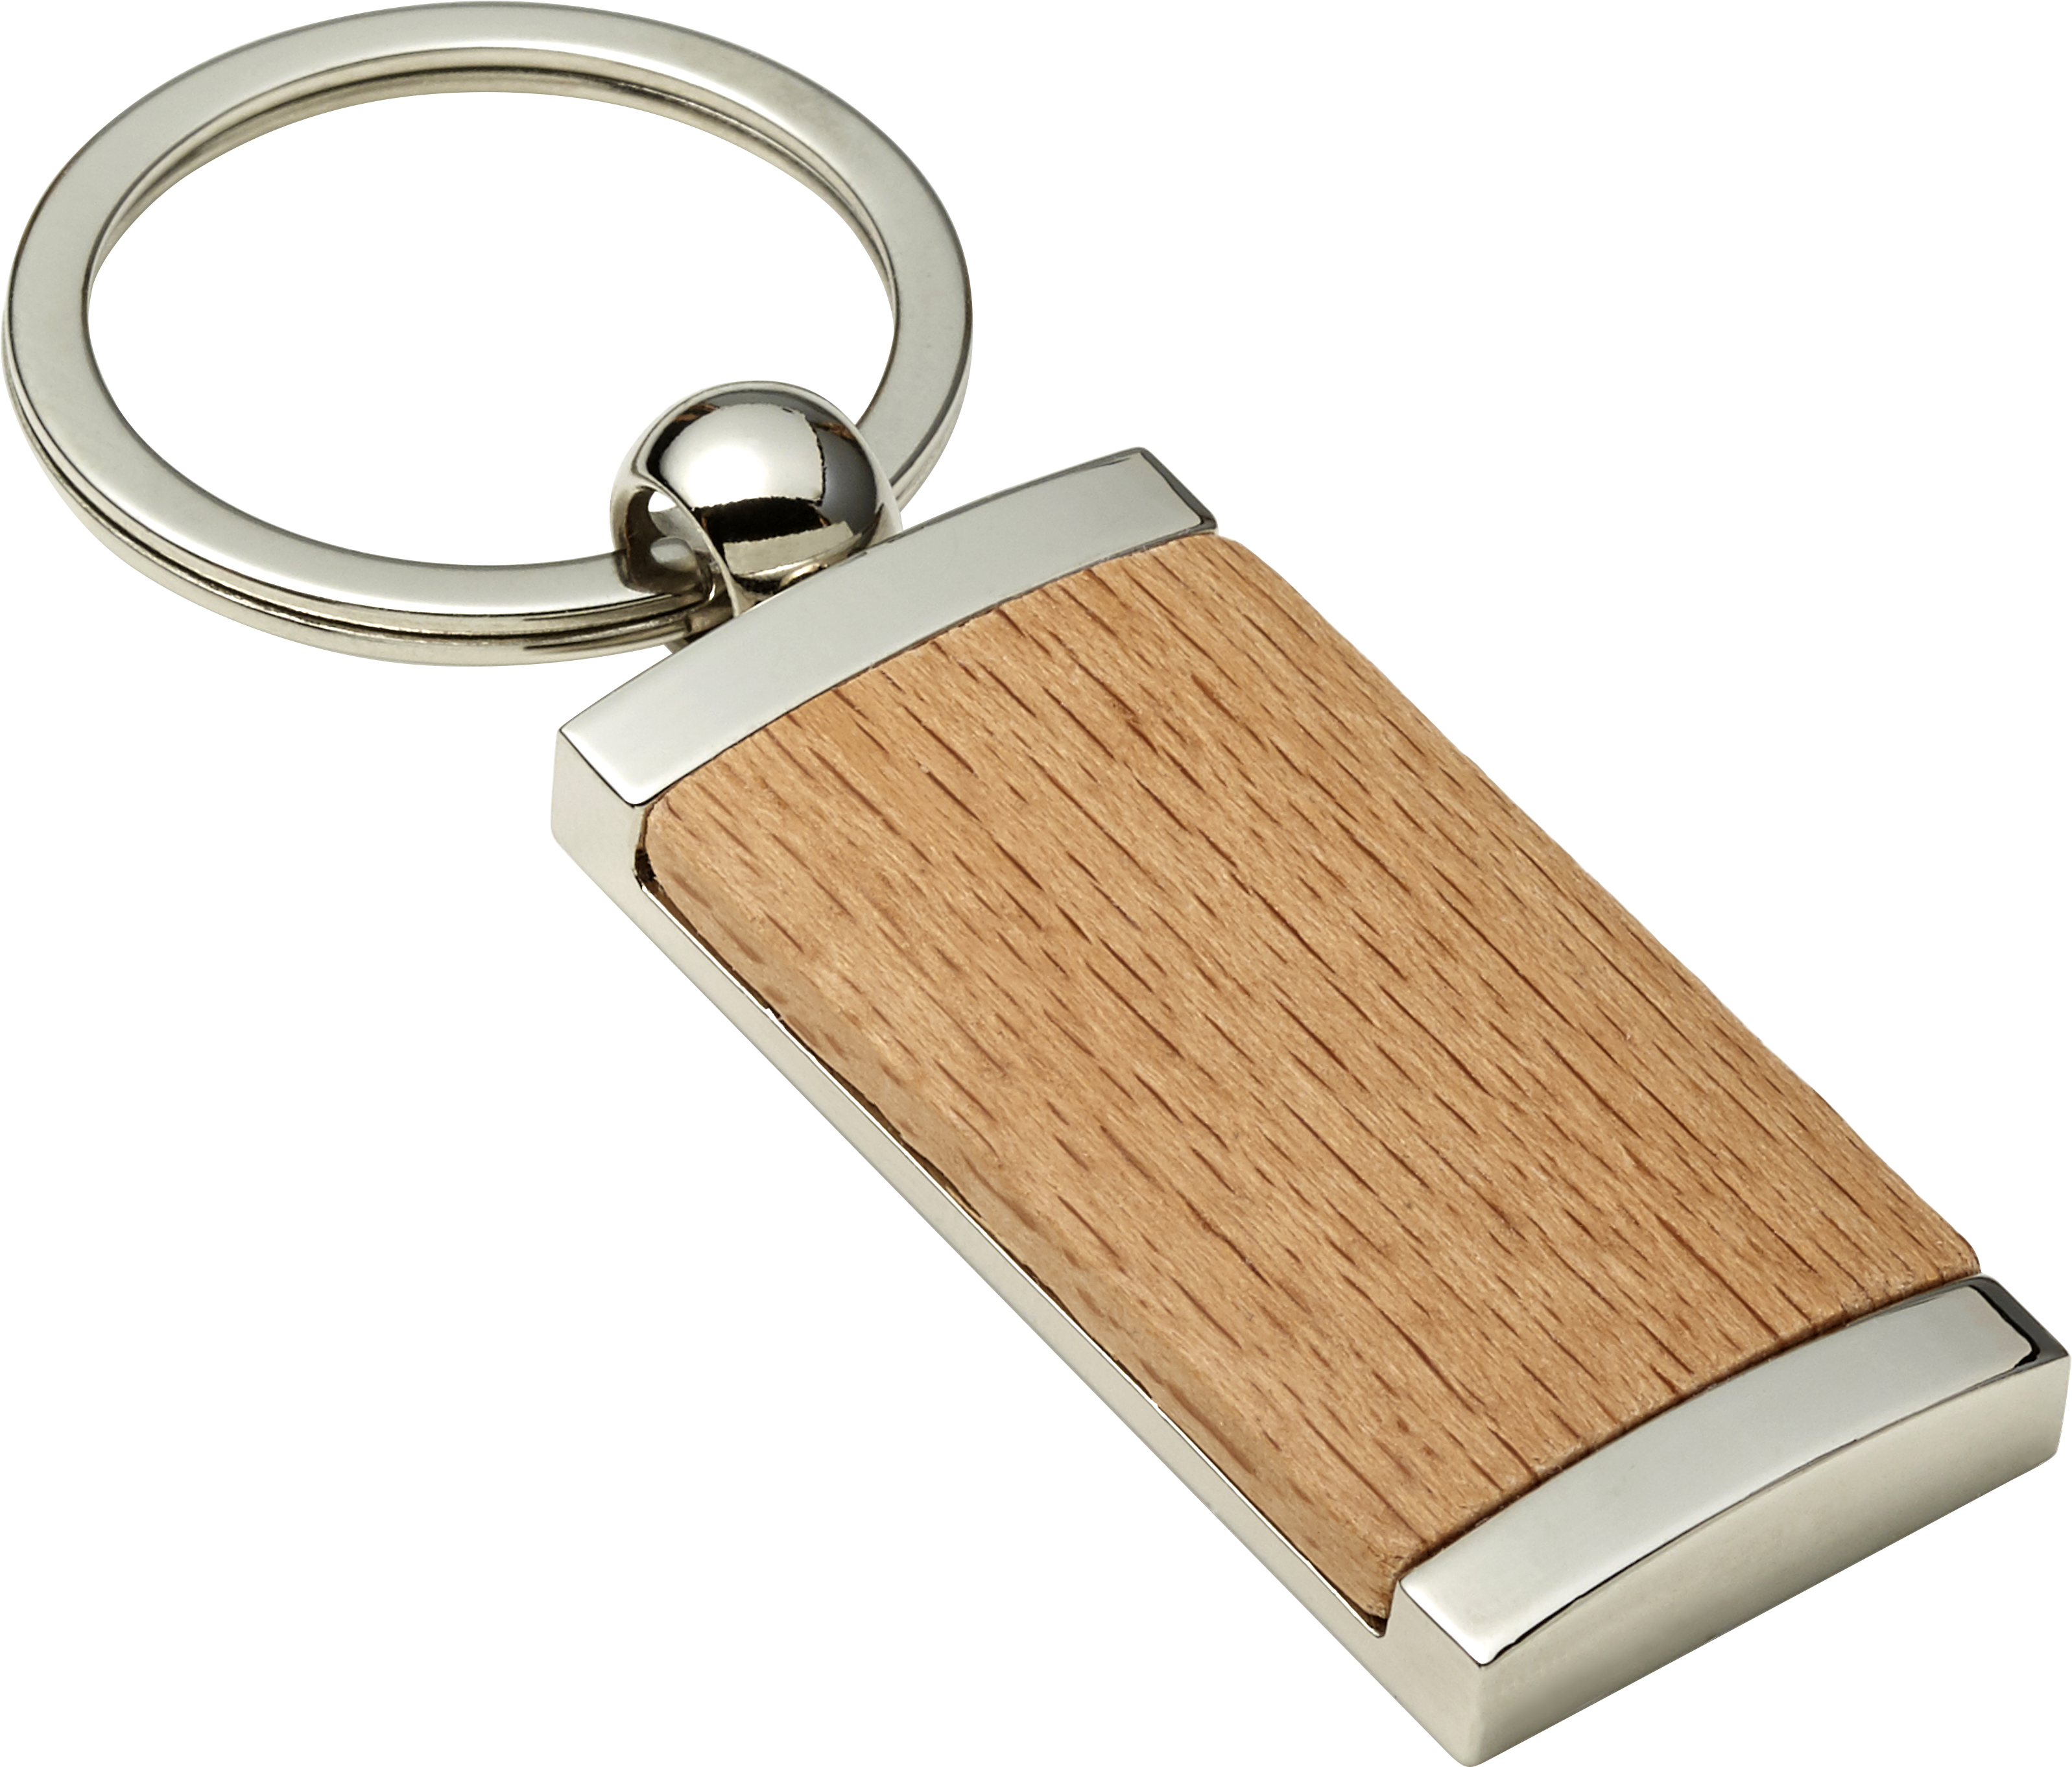 008771 011999999 3d135 lft pro01 fal - Metal and wooden key holder